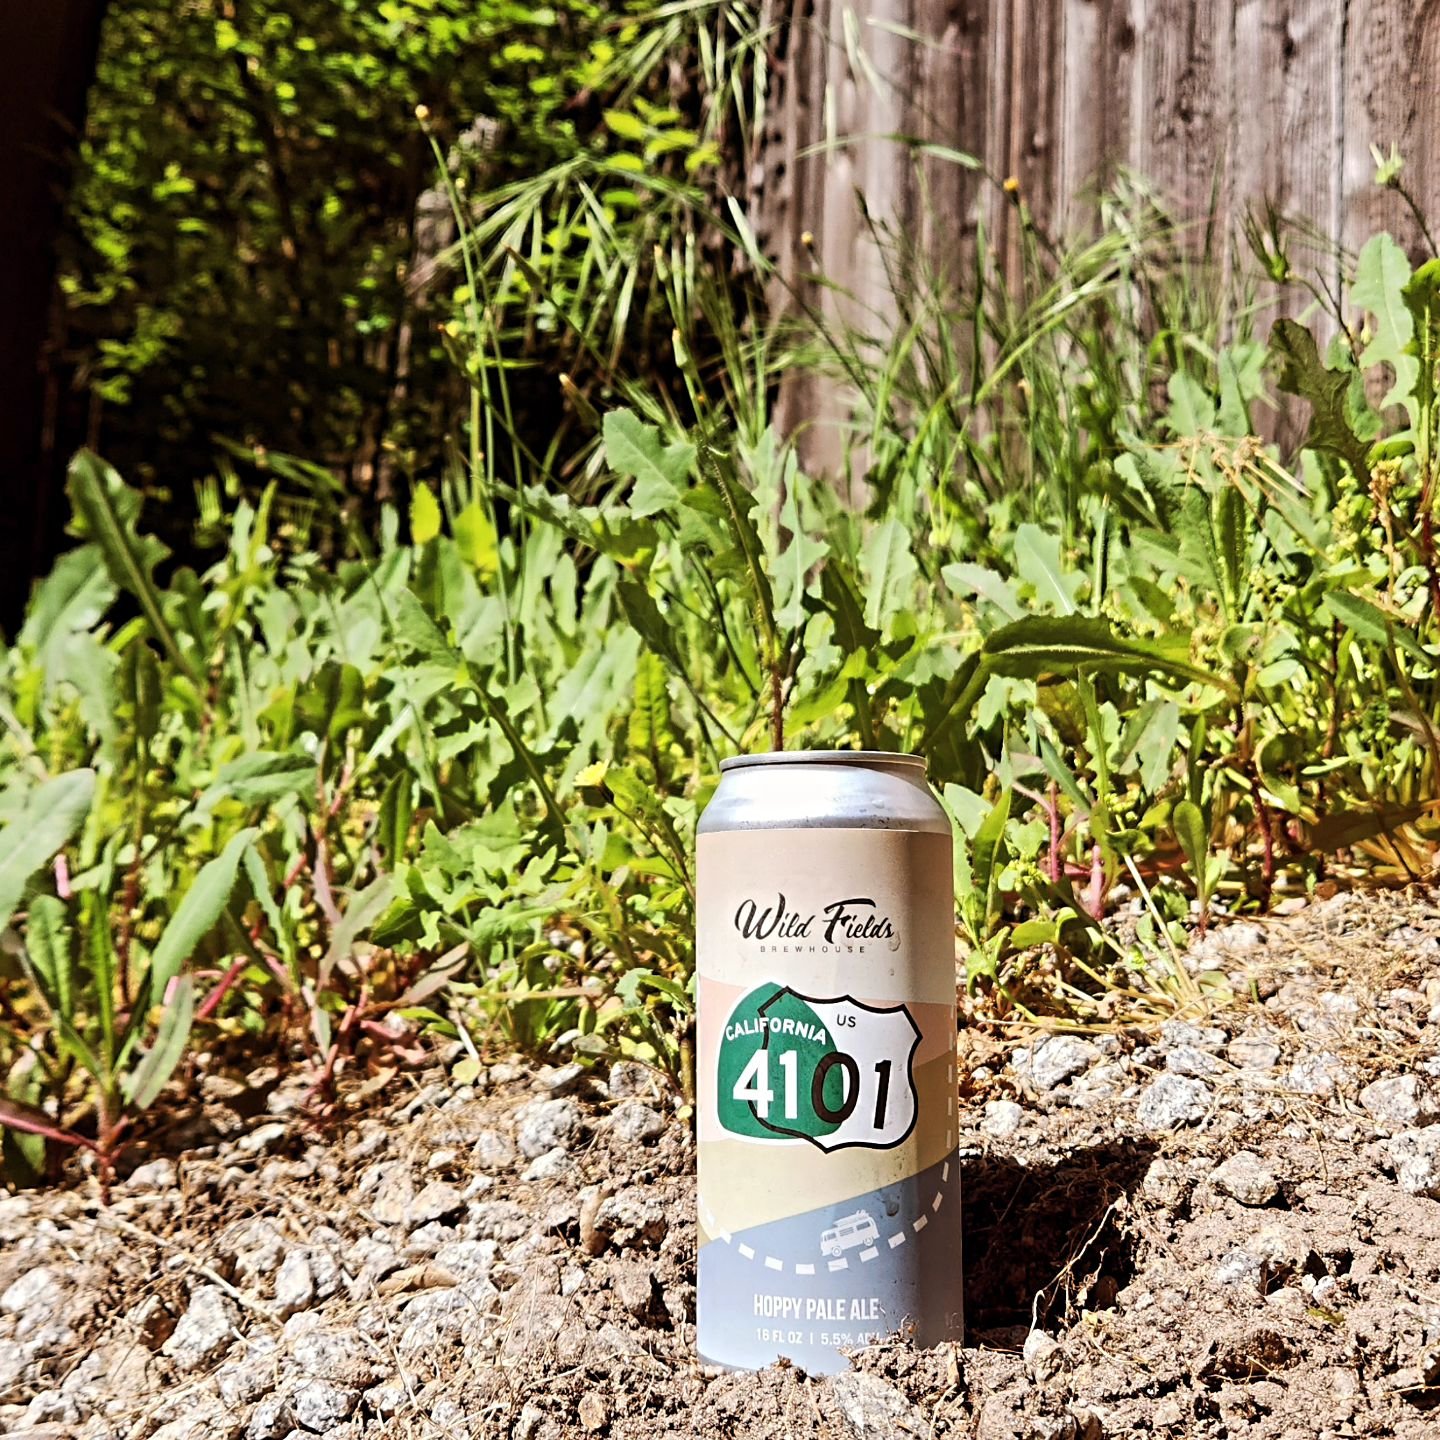 Is it just us or is yardwork so much better with a beer? 🍻

#atascadero #spring #yardwork #springhassprung #beersupport #coldbeer #slocounty #santamargarita #templeton #805beer